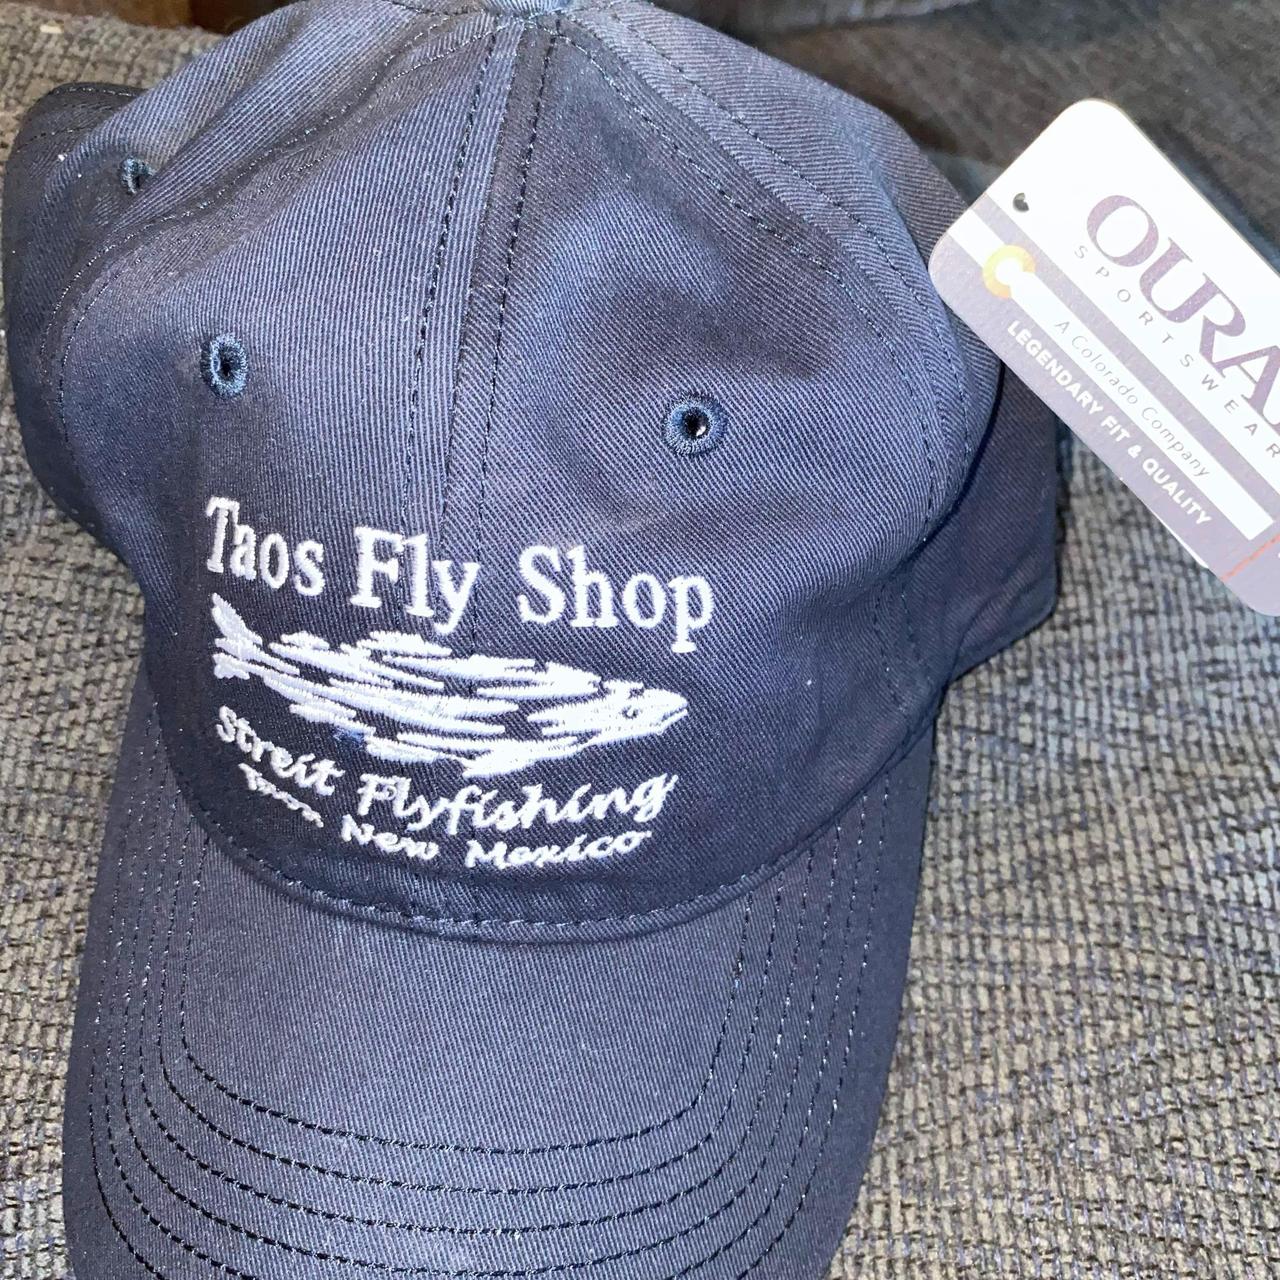 Taos Fly Shoe fly fishing baseball cap hat - Depop